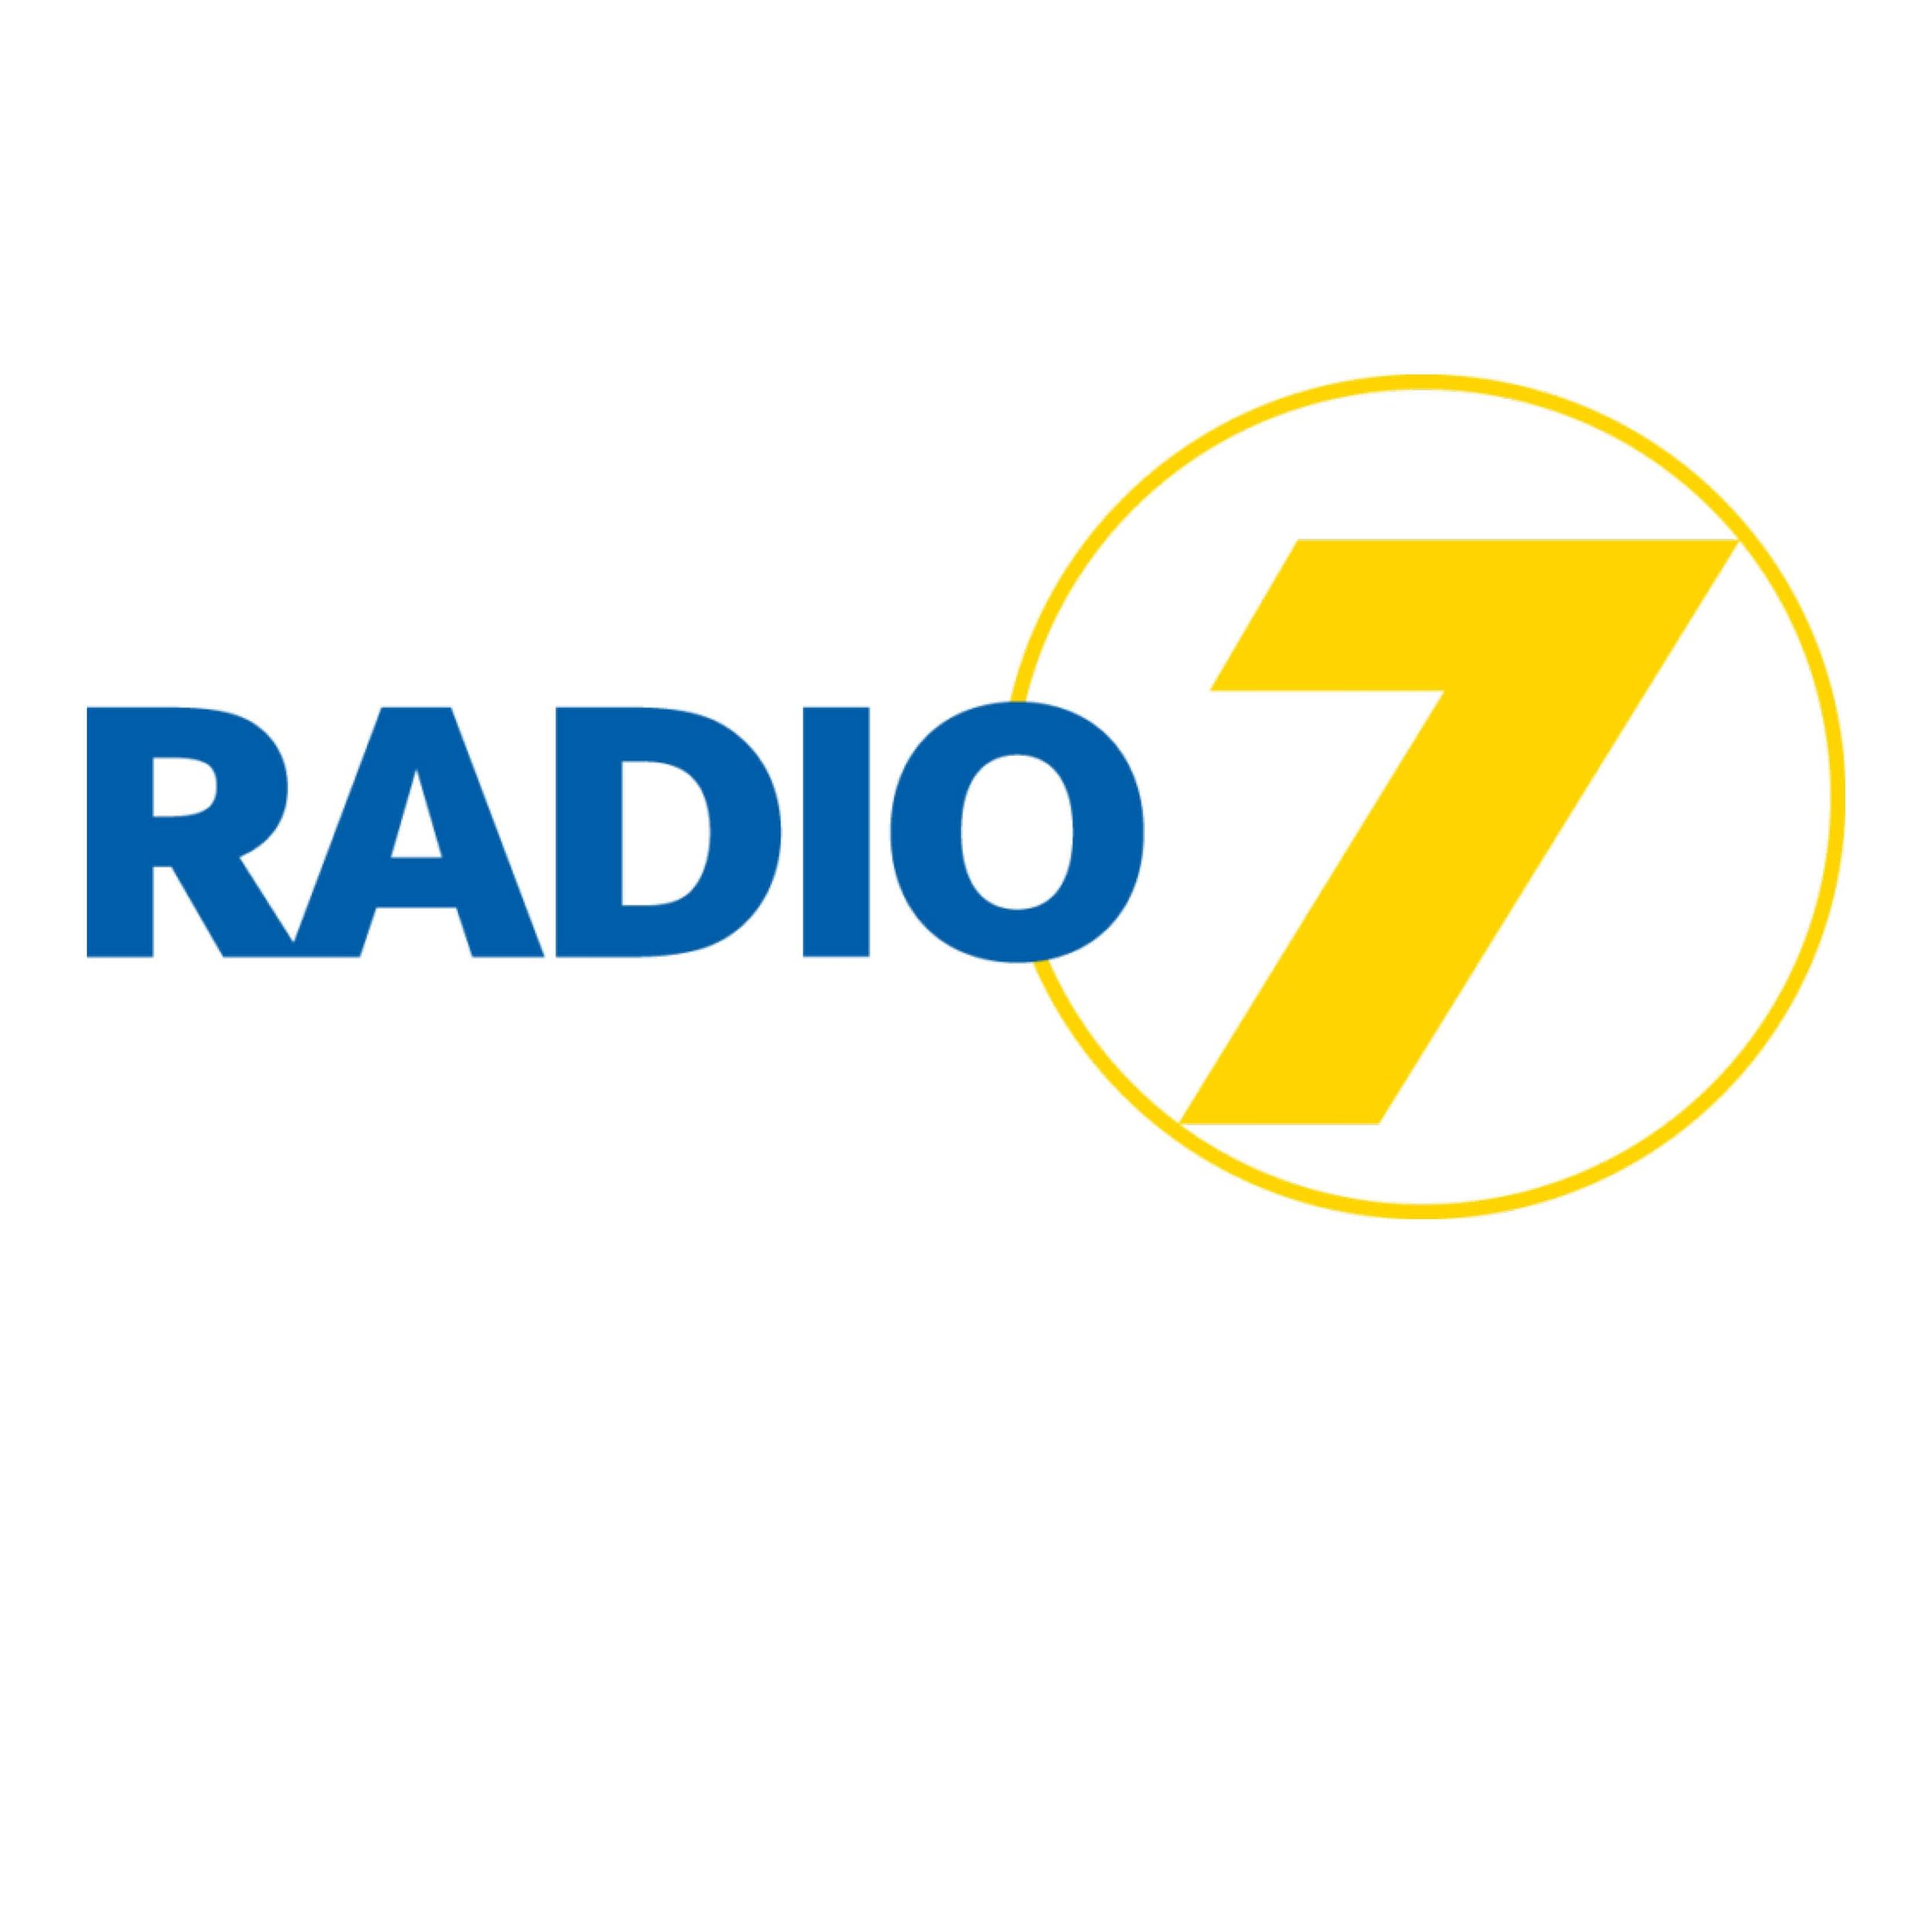 Radio 7 (Kopie)